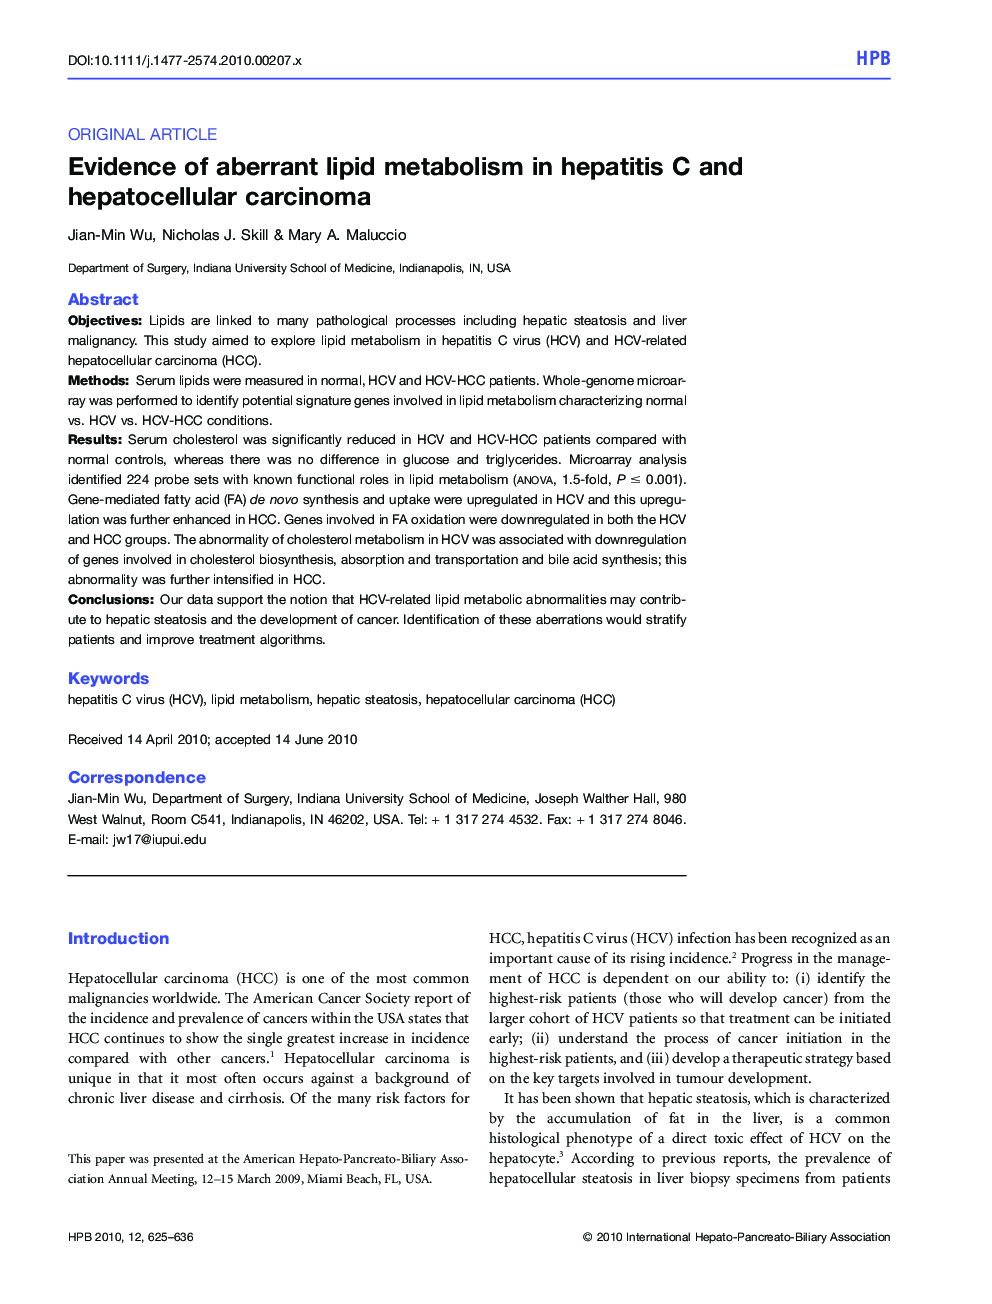 Evidence of aberrant lipid metabolism in hepatitis C and hepatocellular carcinoma